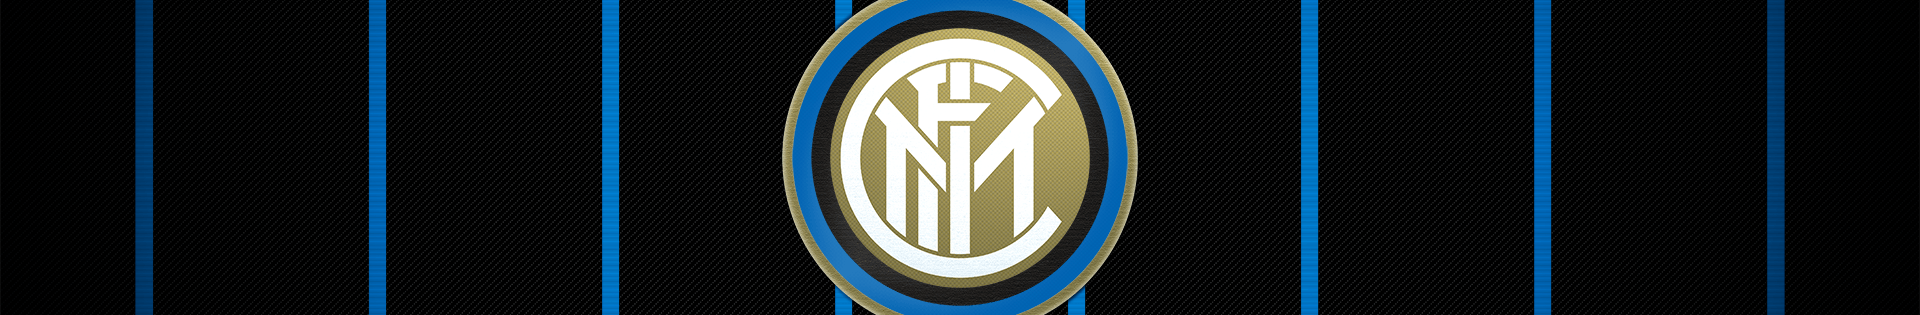 Fussballreisen Inter Mailand Perfect Tours Serie A (1)